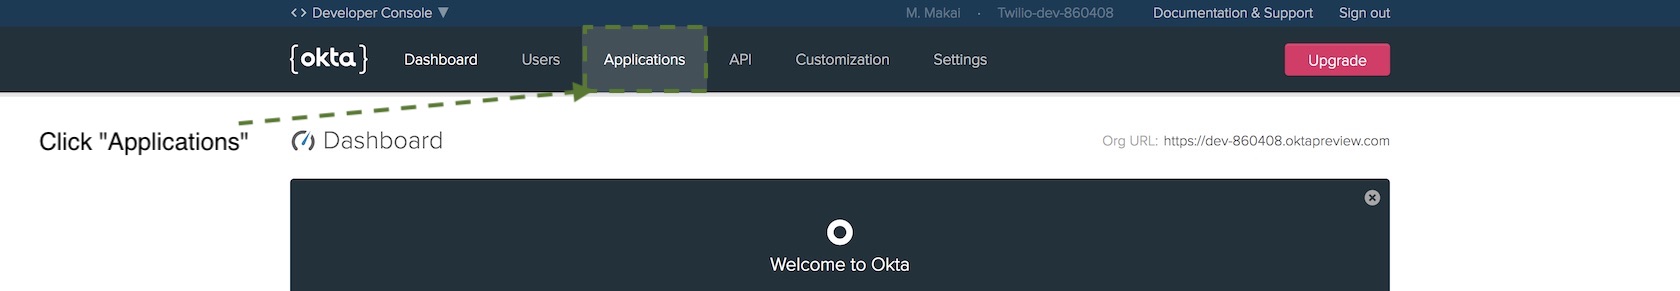 Select applications on the Okta developer dashboard.